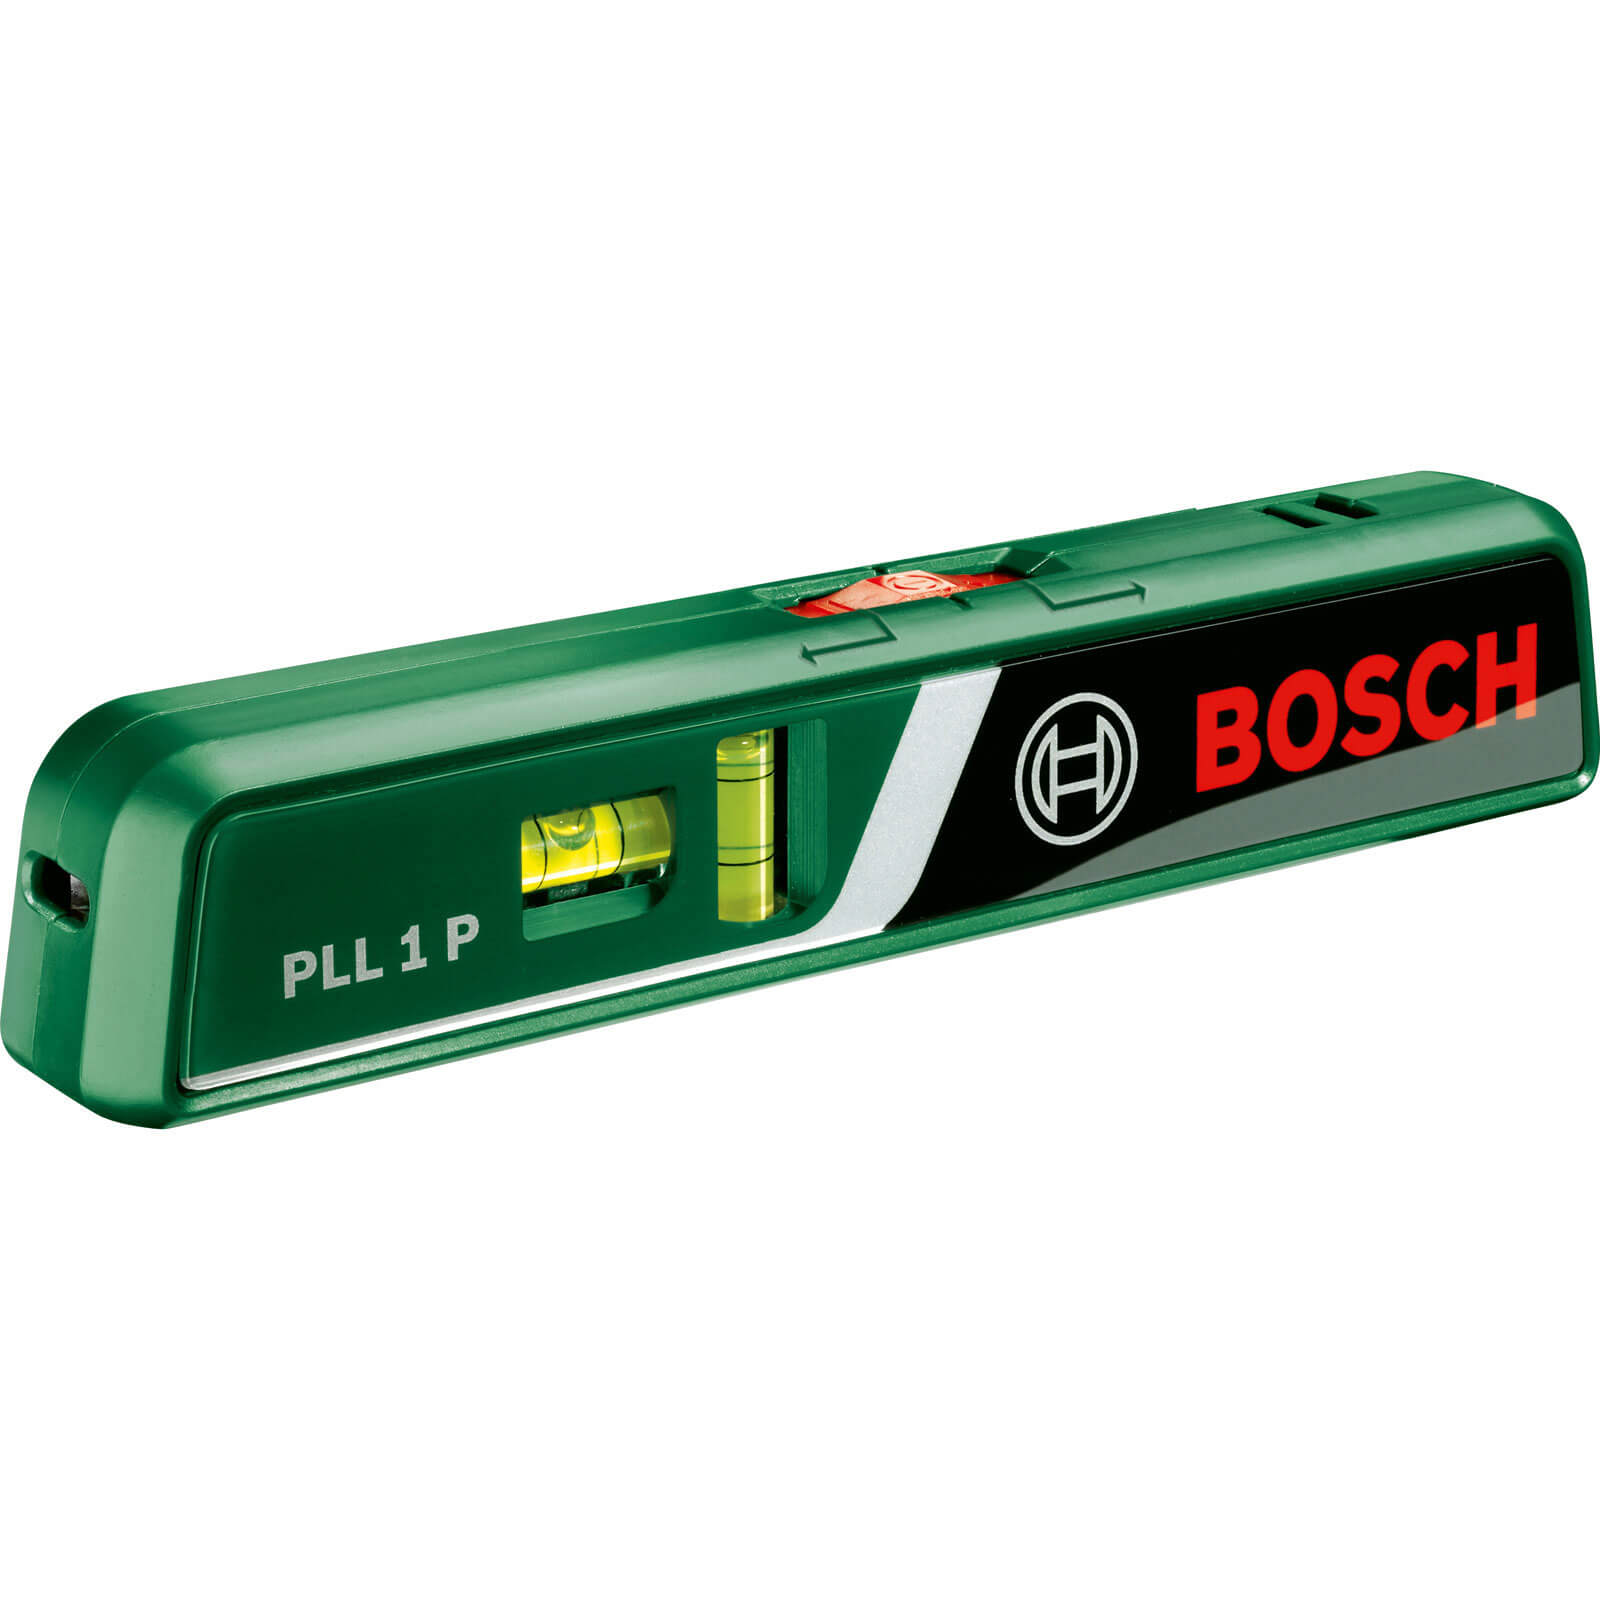 Photo of Bosch Pll 1 P Pocket Spirit Level And Laser Line Level